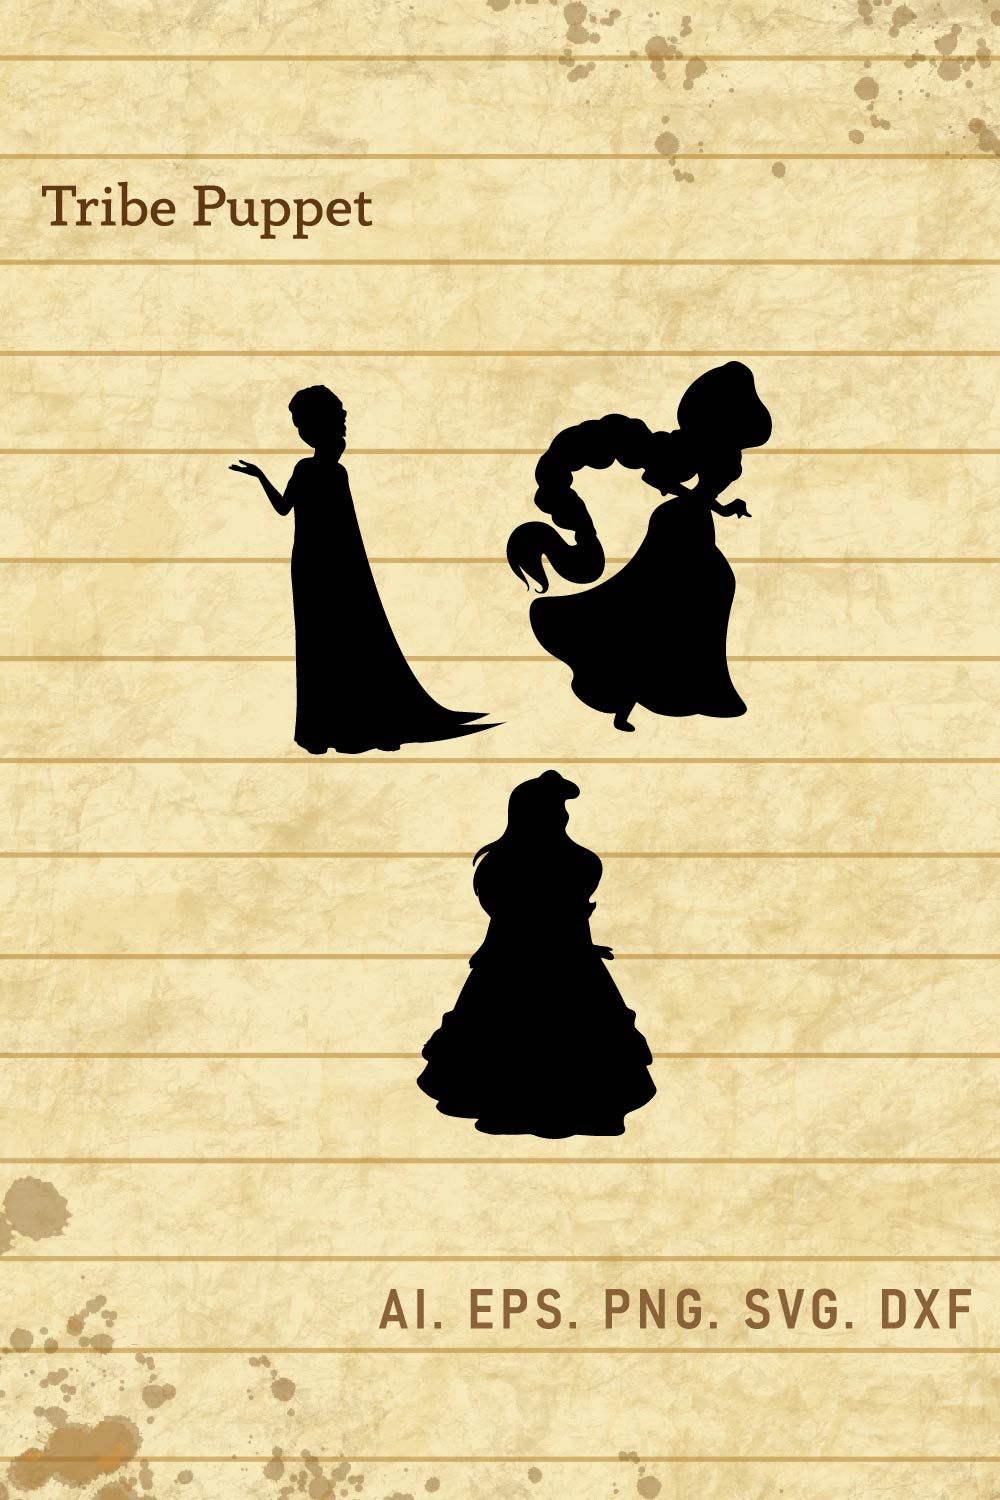 Disney Princess pinterest preview image.